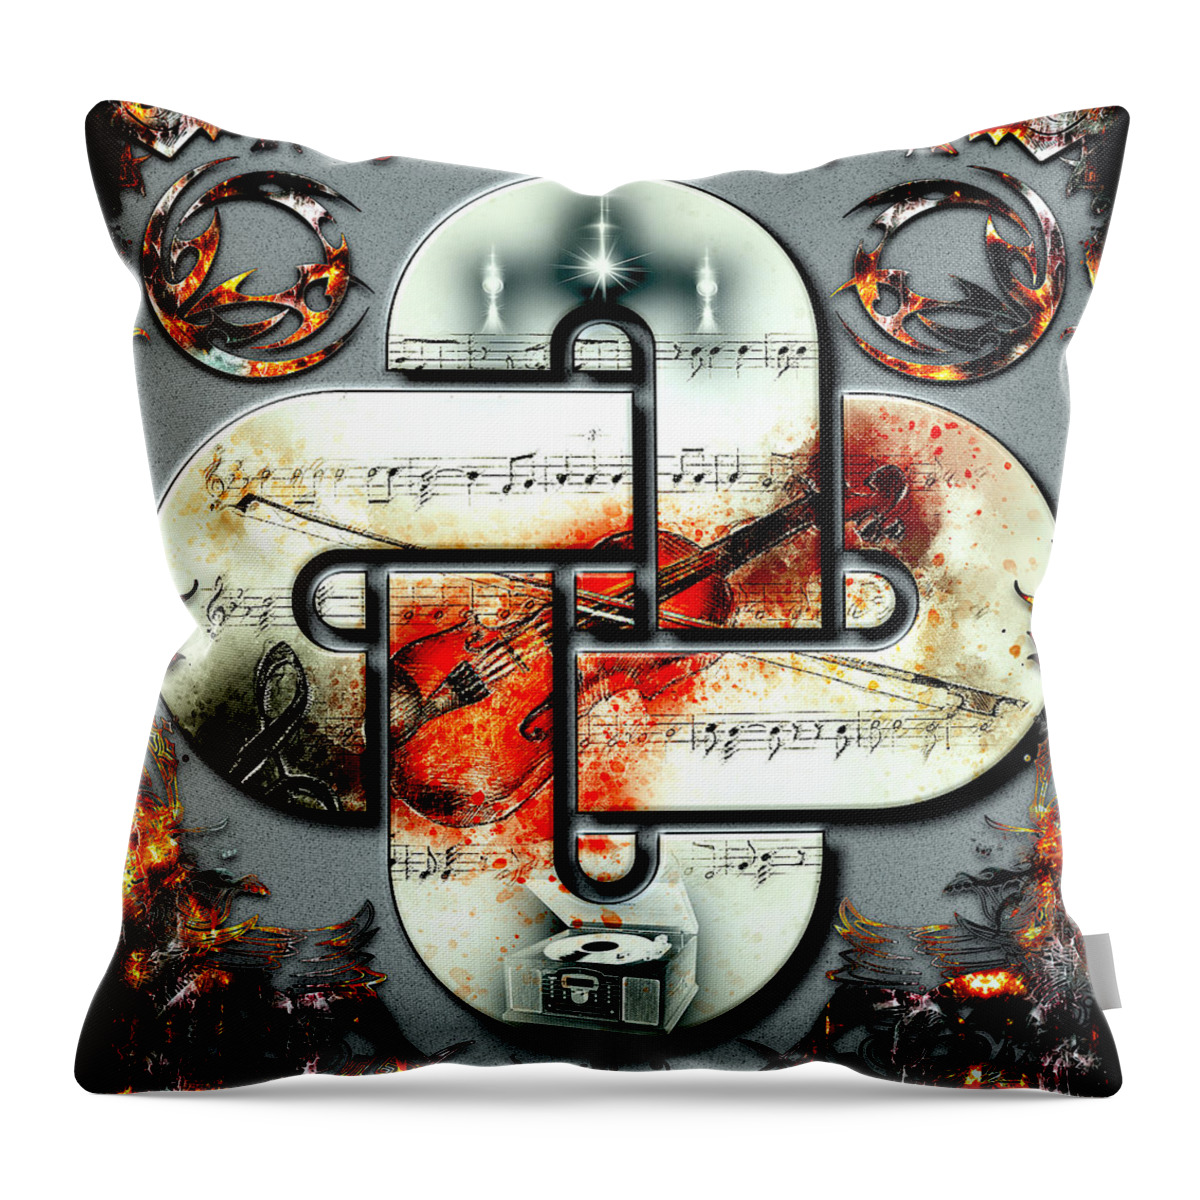 Stradivarius Throw Pillow featuring the digital art The Stradivarius by Michael Damiani